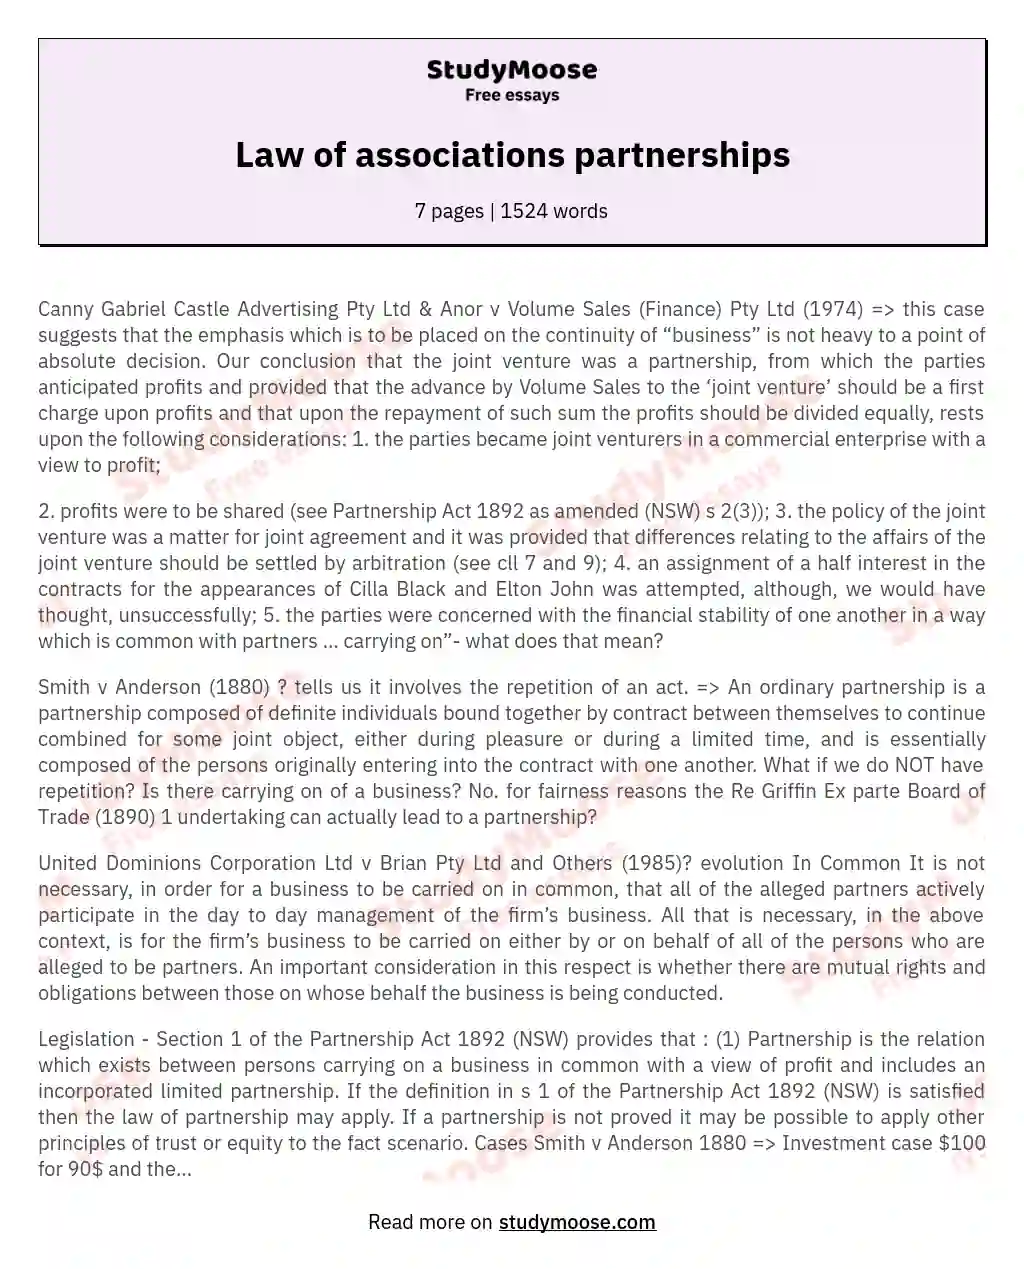 Law of associations partnerships essay